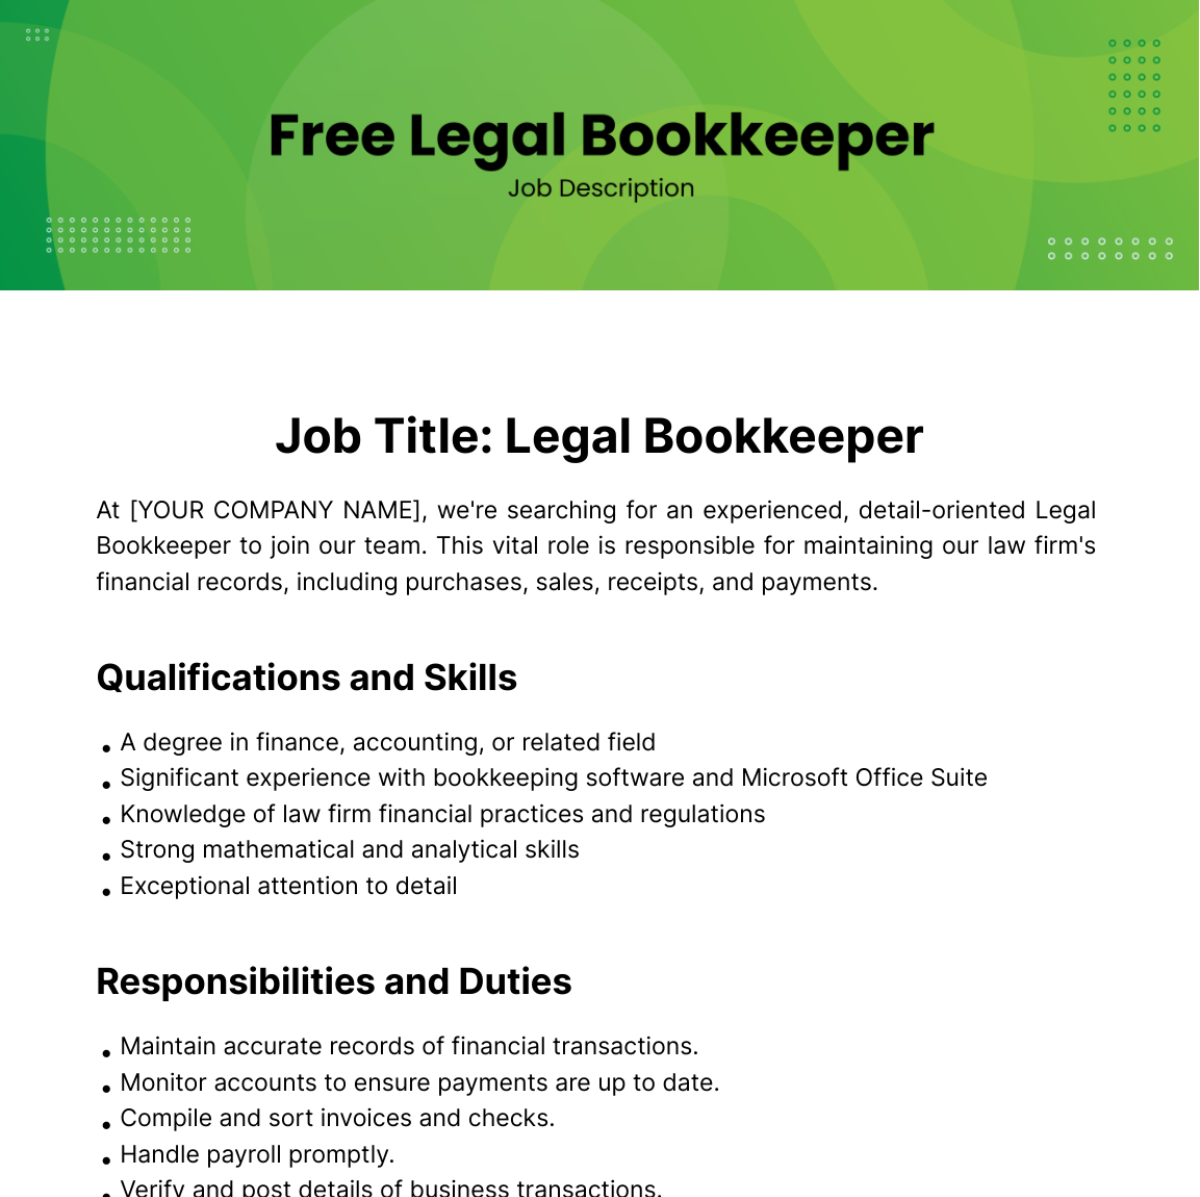 Free Legal Bookkeeper Job Description Template